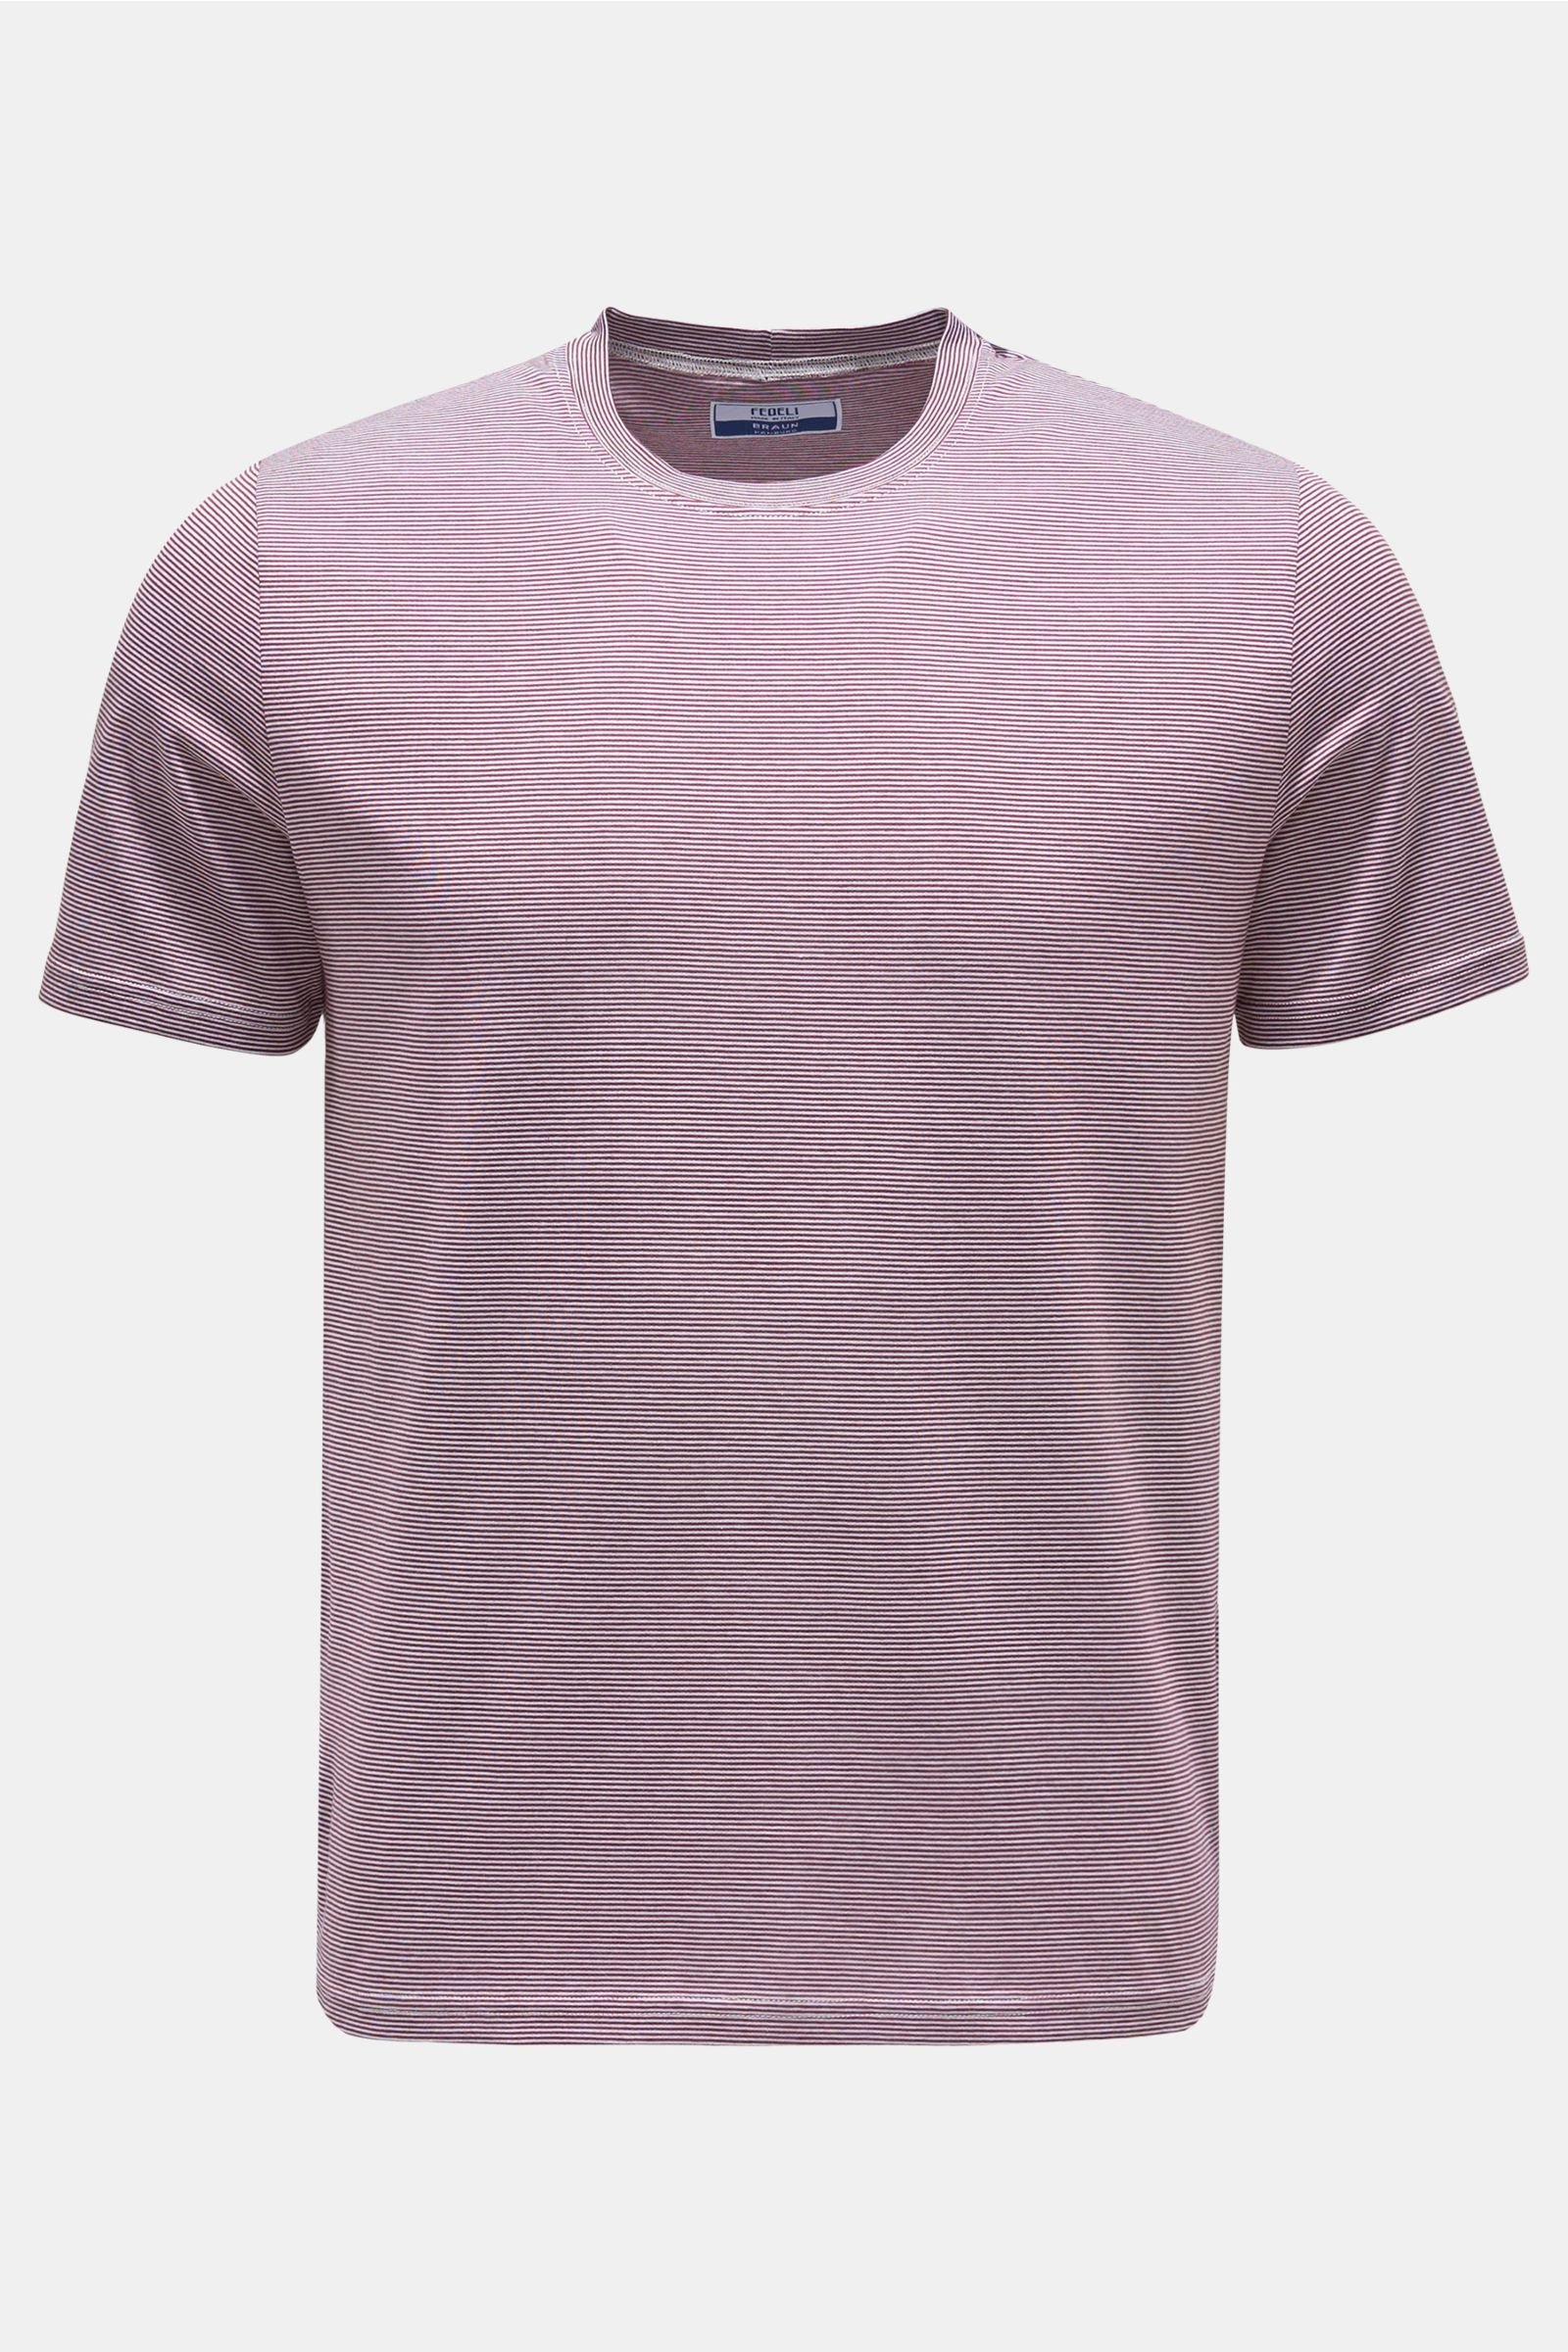 Crew neck T-shirt 'Gary' burgundy/white striped